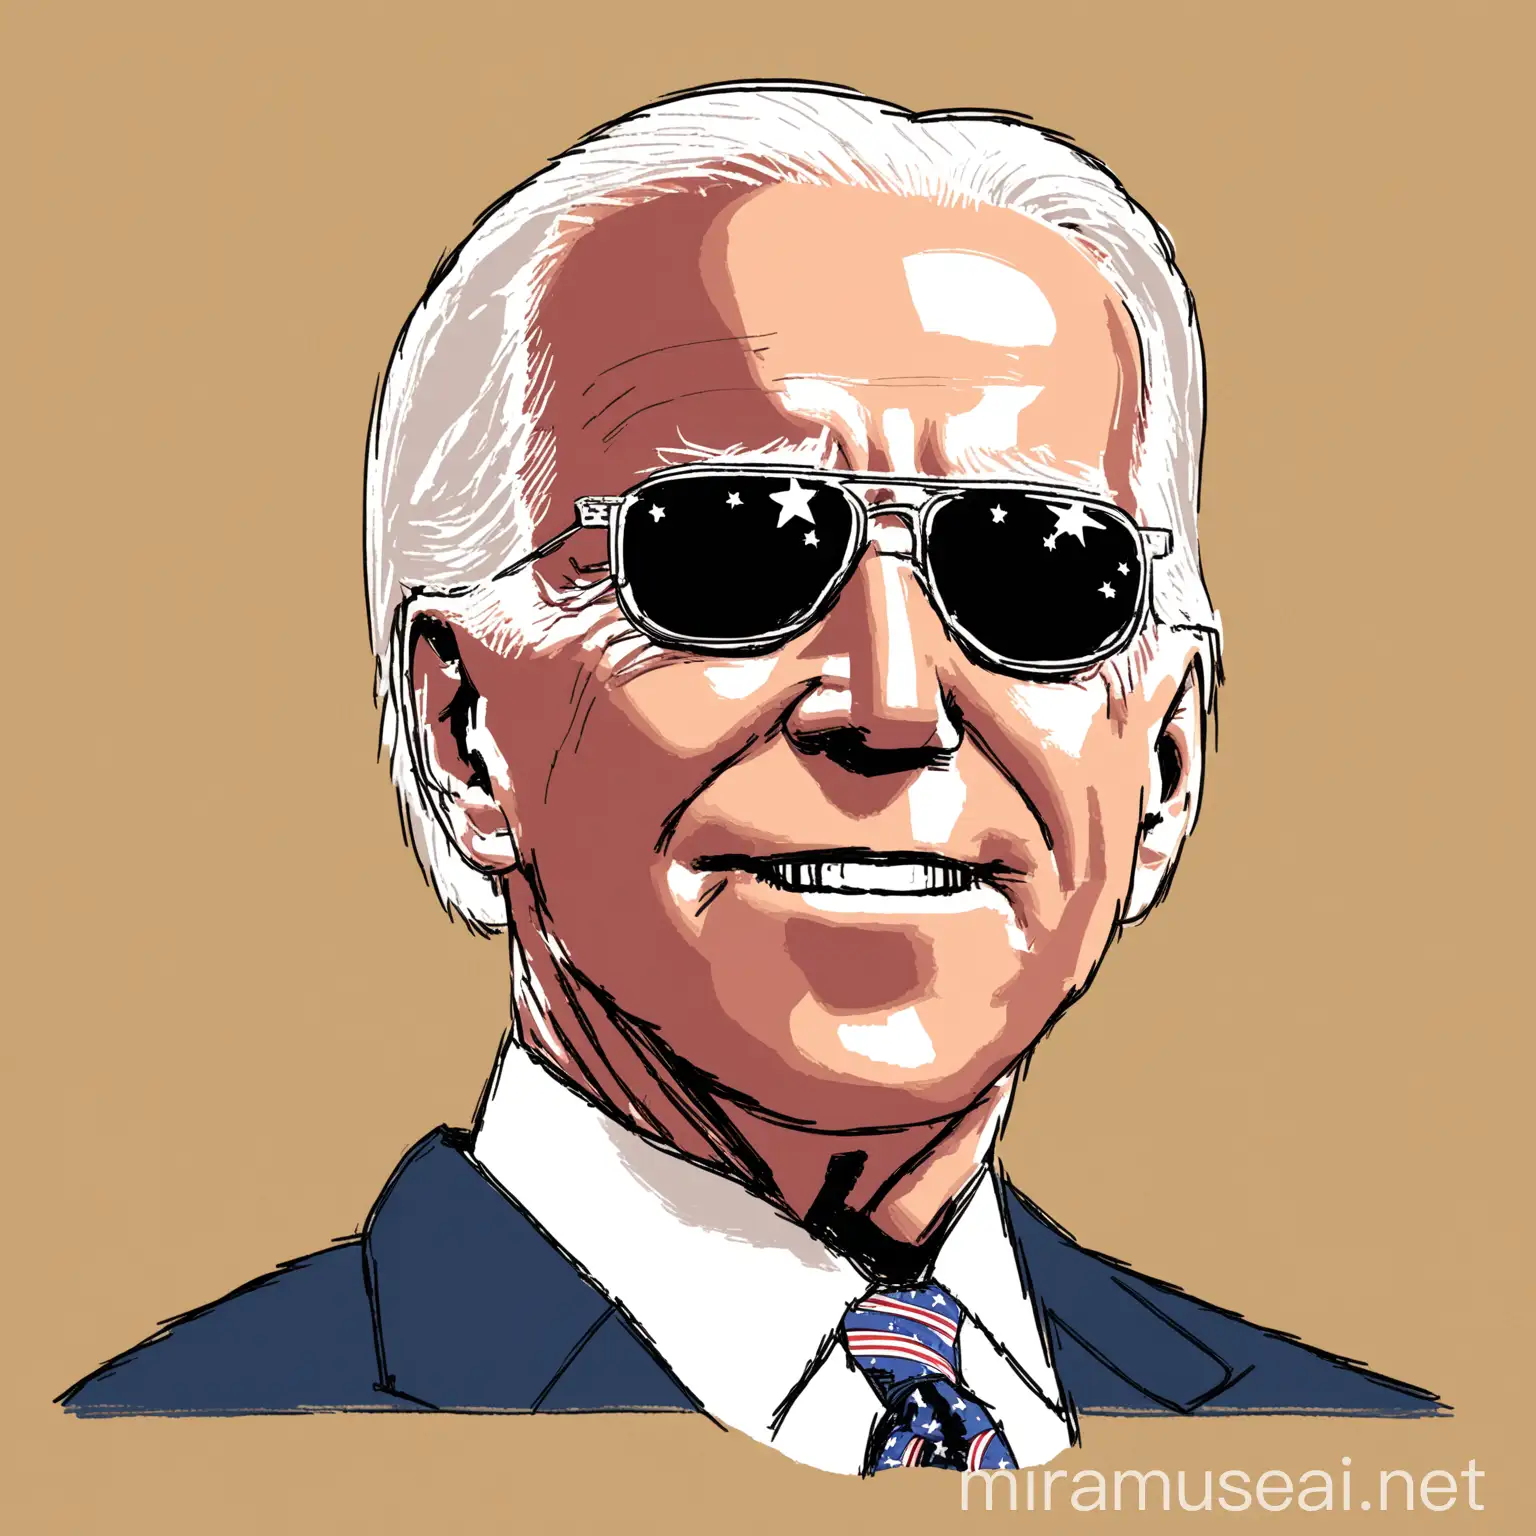 HandDrawn Illustration of Joe Biden Wearing US Sunglasses